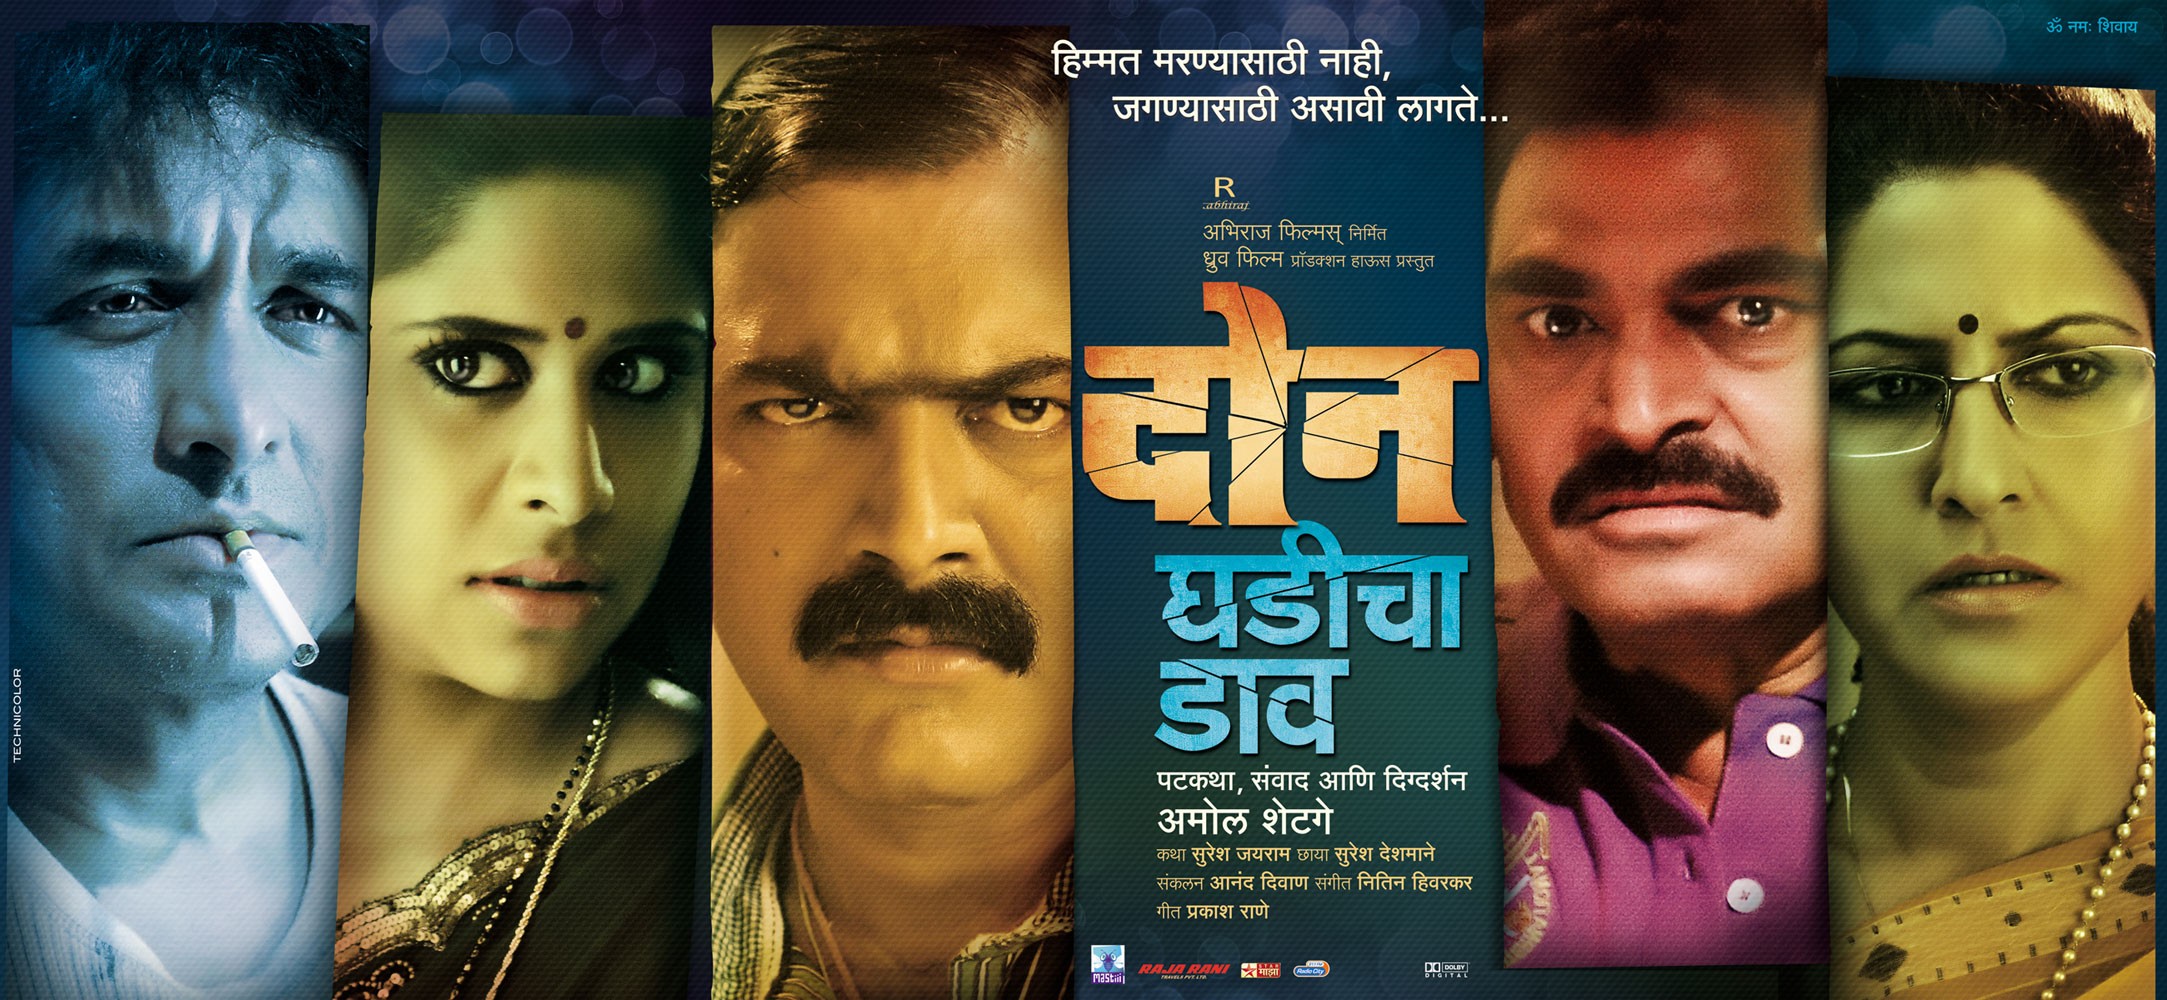 Mega Sized Movie Poster Image for Don Ghadicha Daav (#2 of 3)